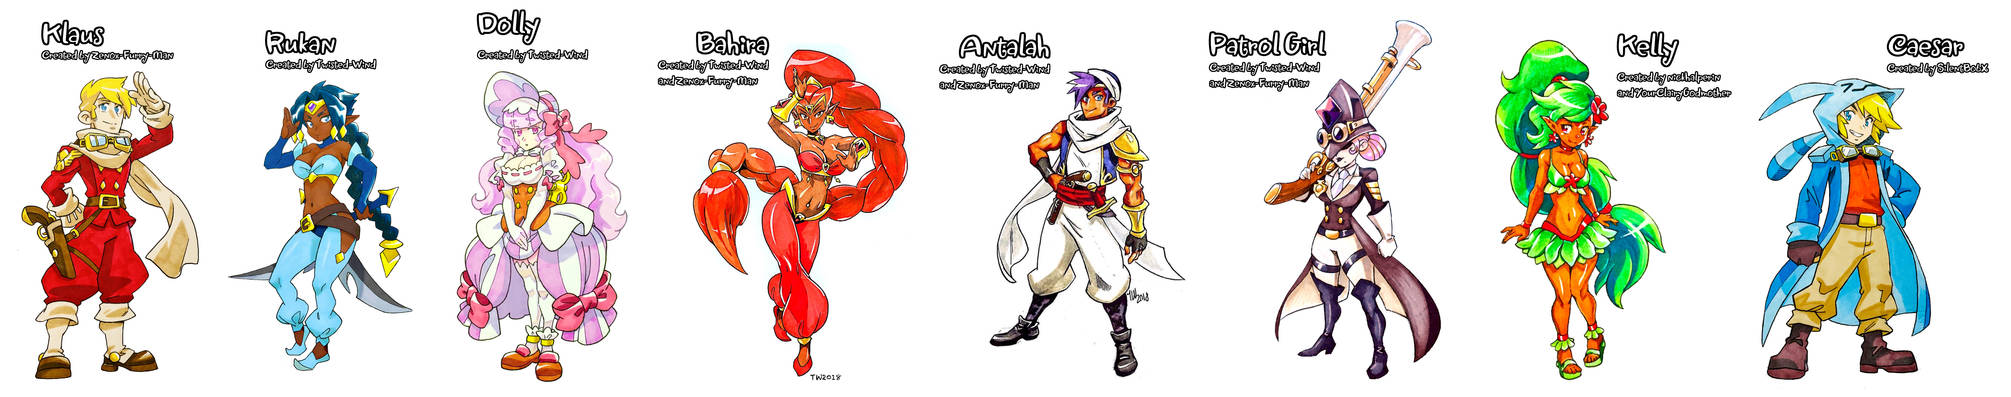 Shantae's community OCs by Twisted-Wind